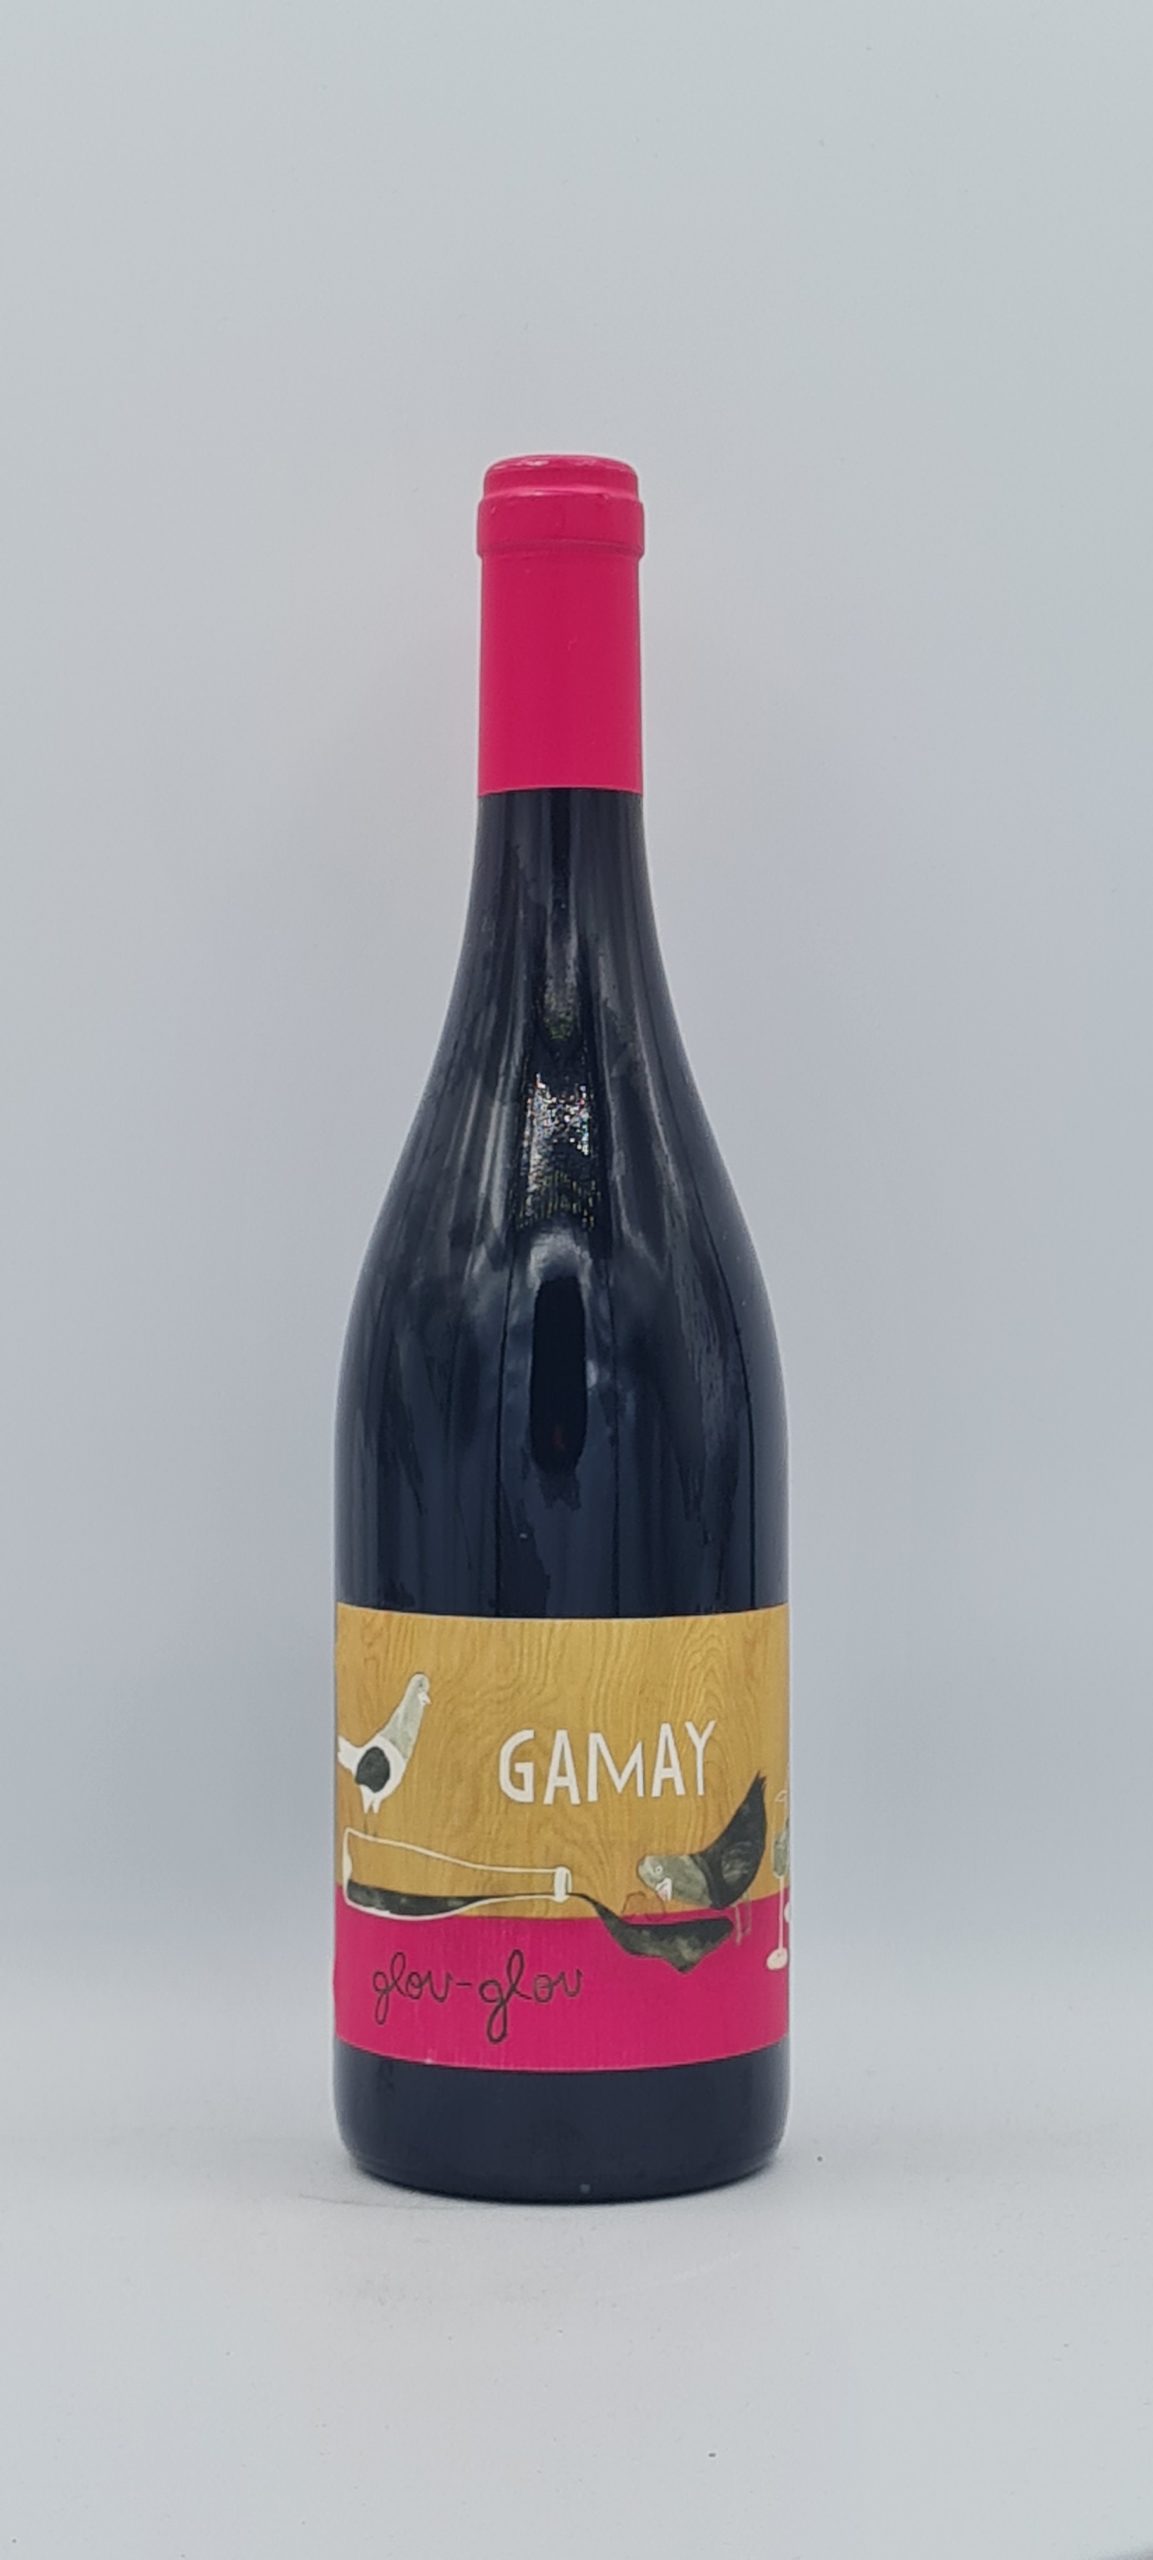 Beaujolais Gamay Glou-Glou 2020 Domaine Duperray